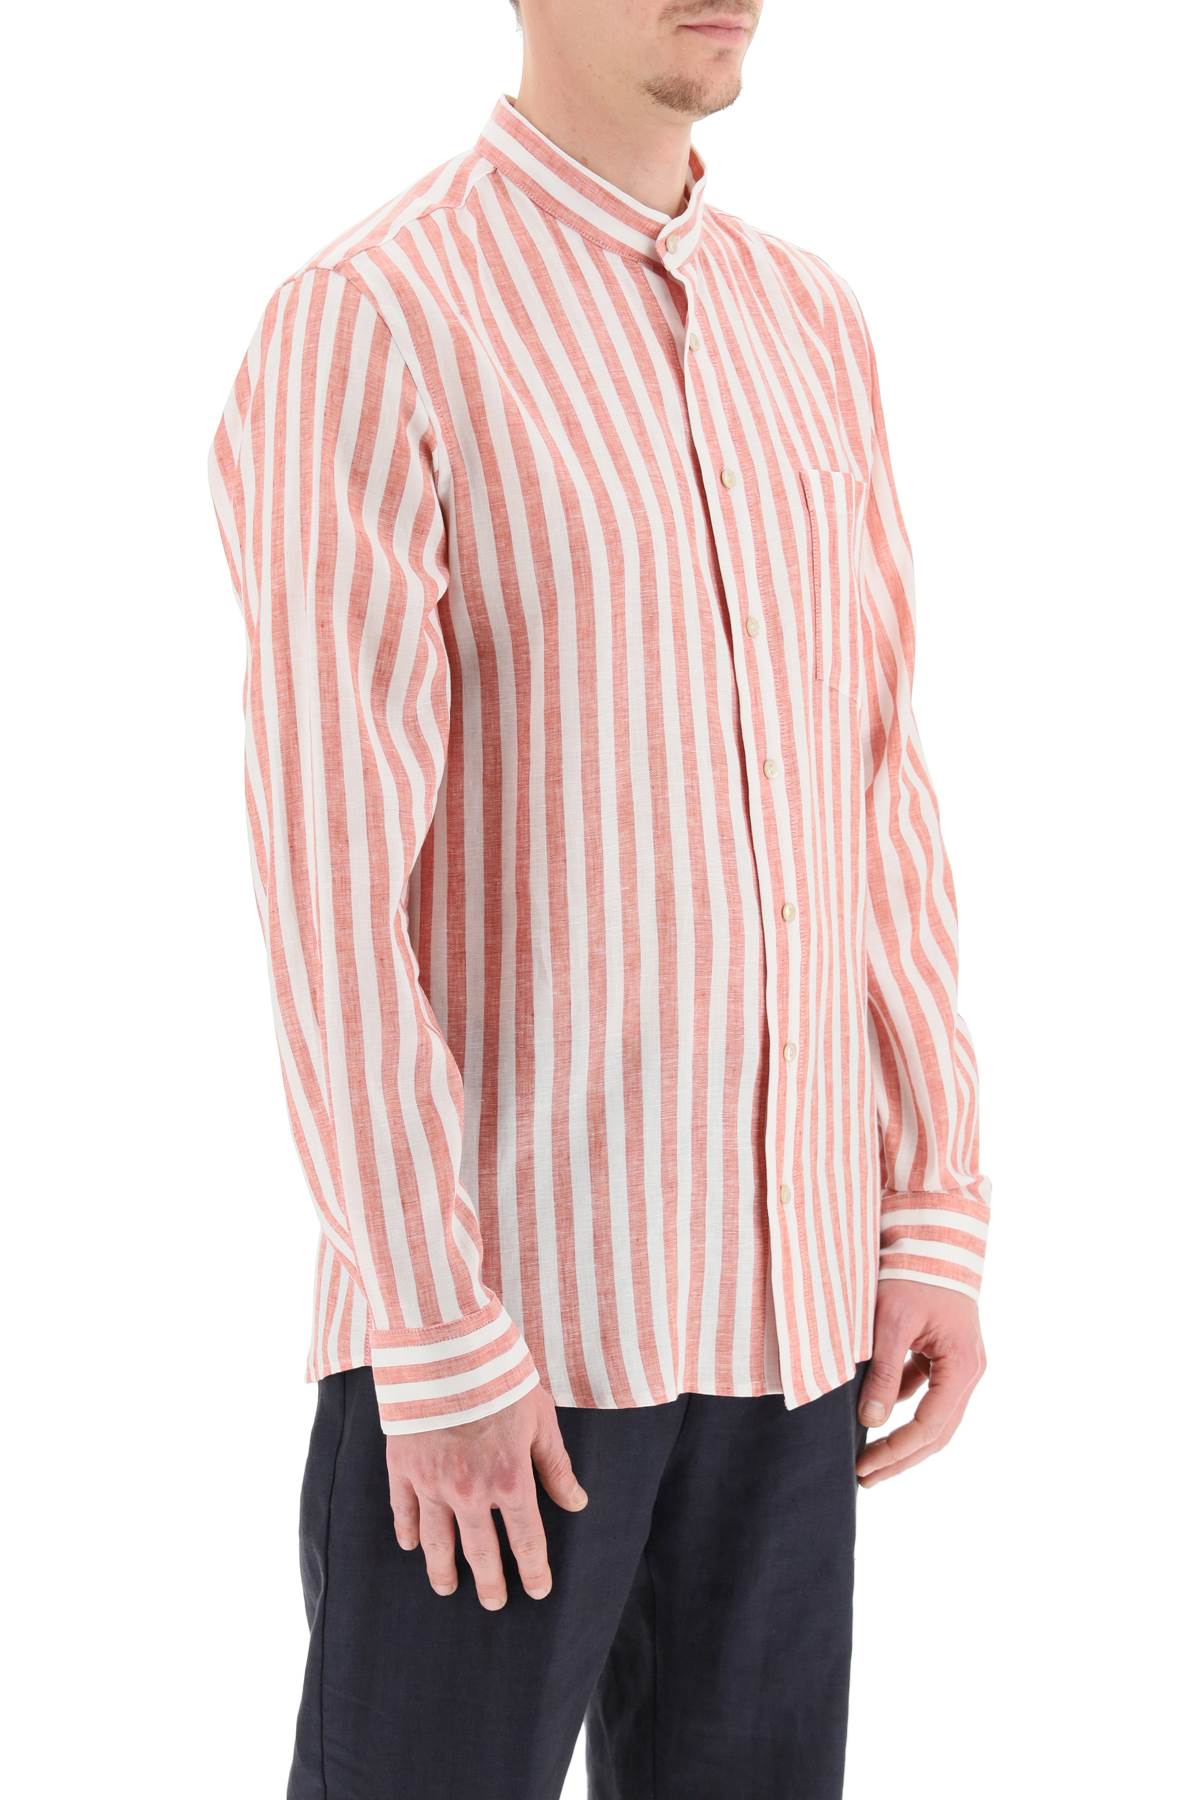 Agnona Agnona striped linen shirt